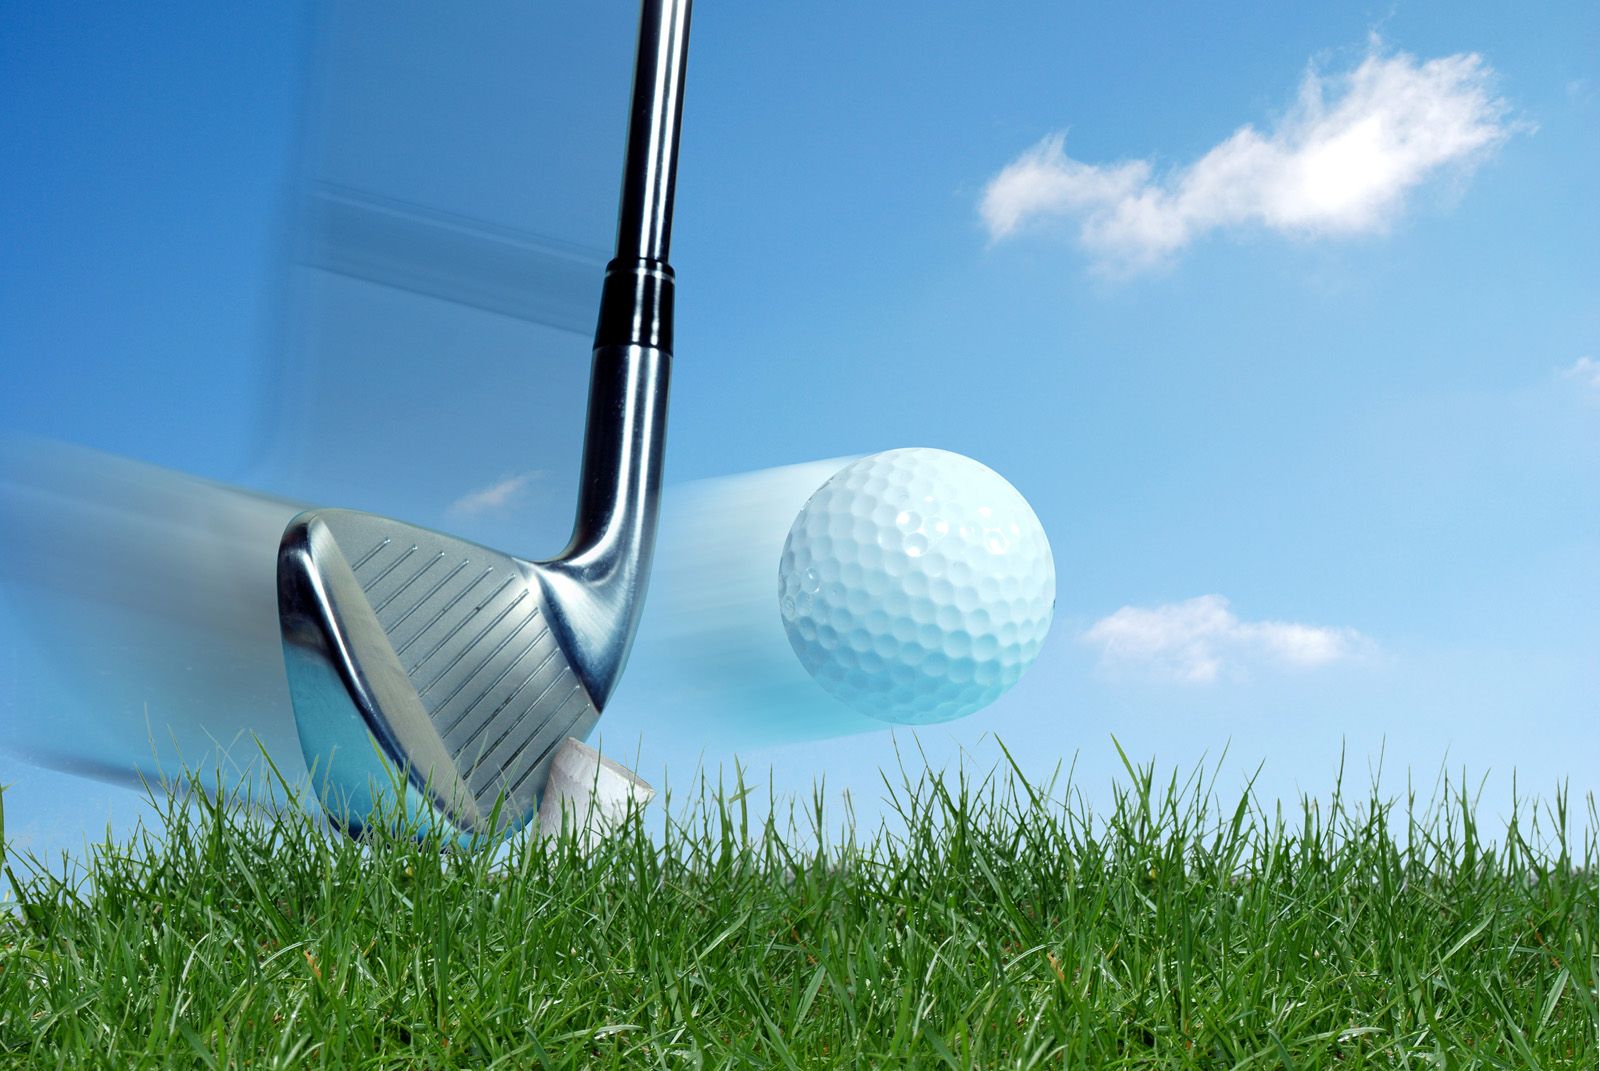 Golf course 49316 - Golf - Sports